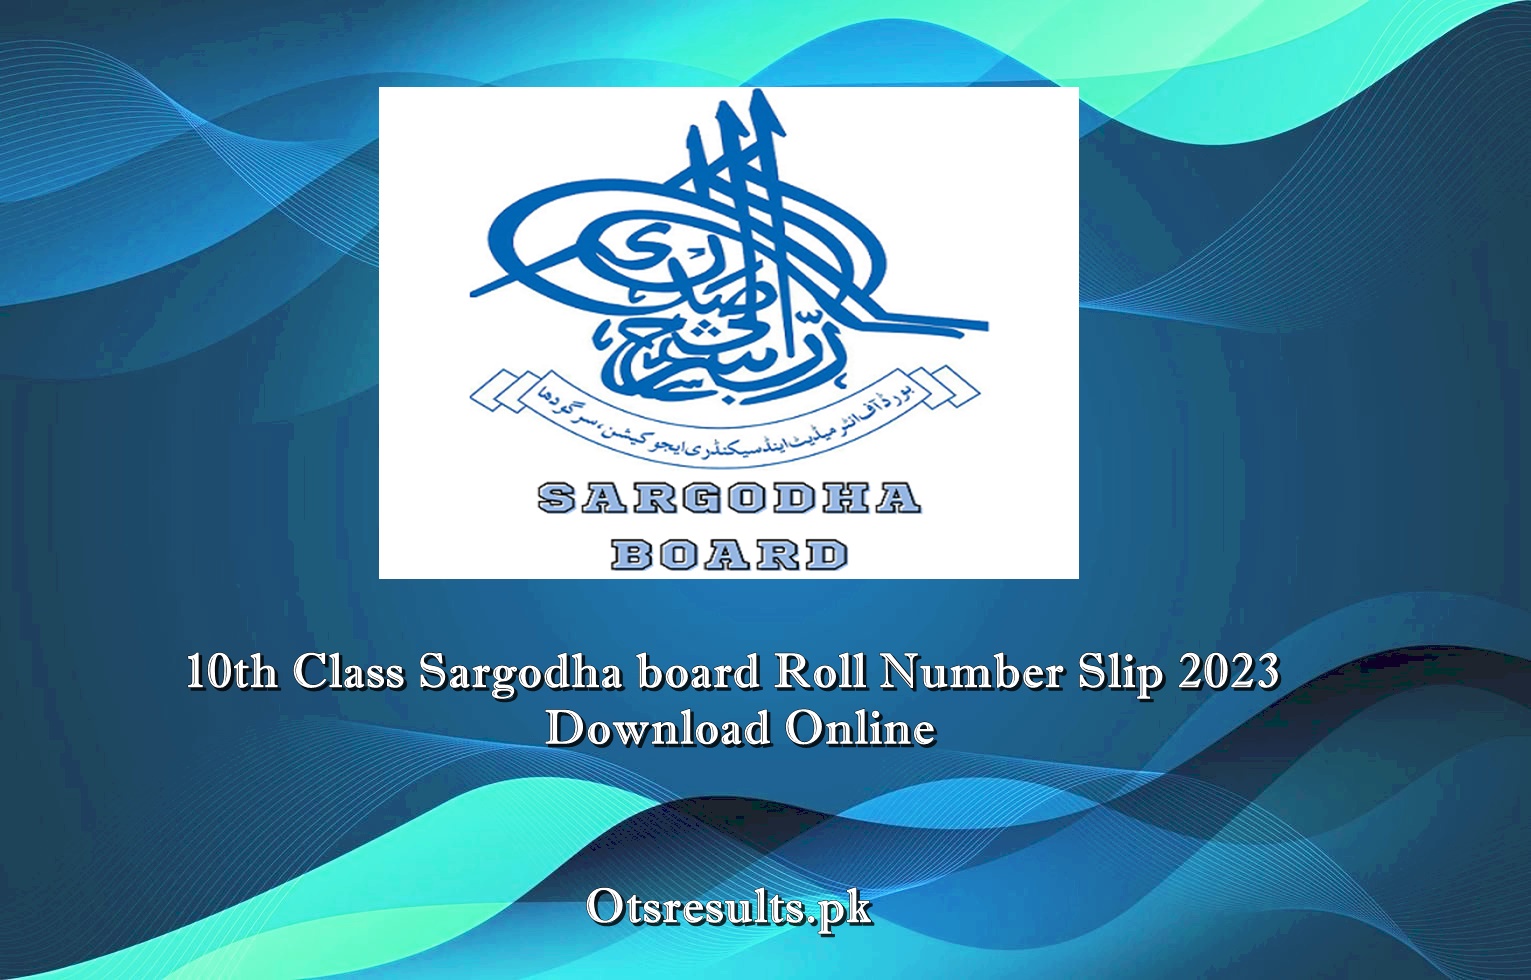 10th Class Sargodha board Roll Number Slip 2023 Download Online